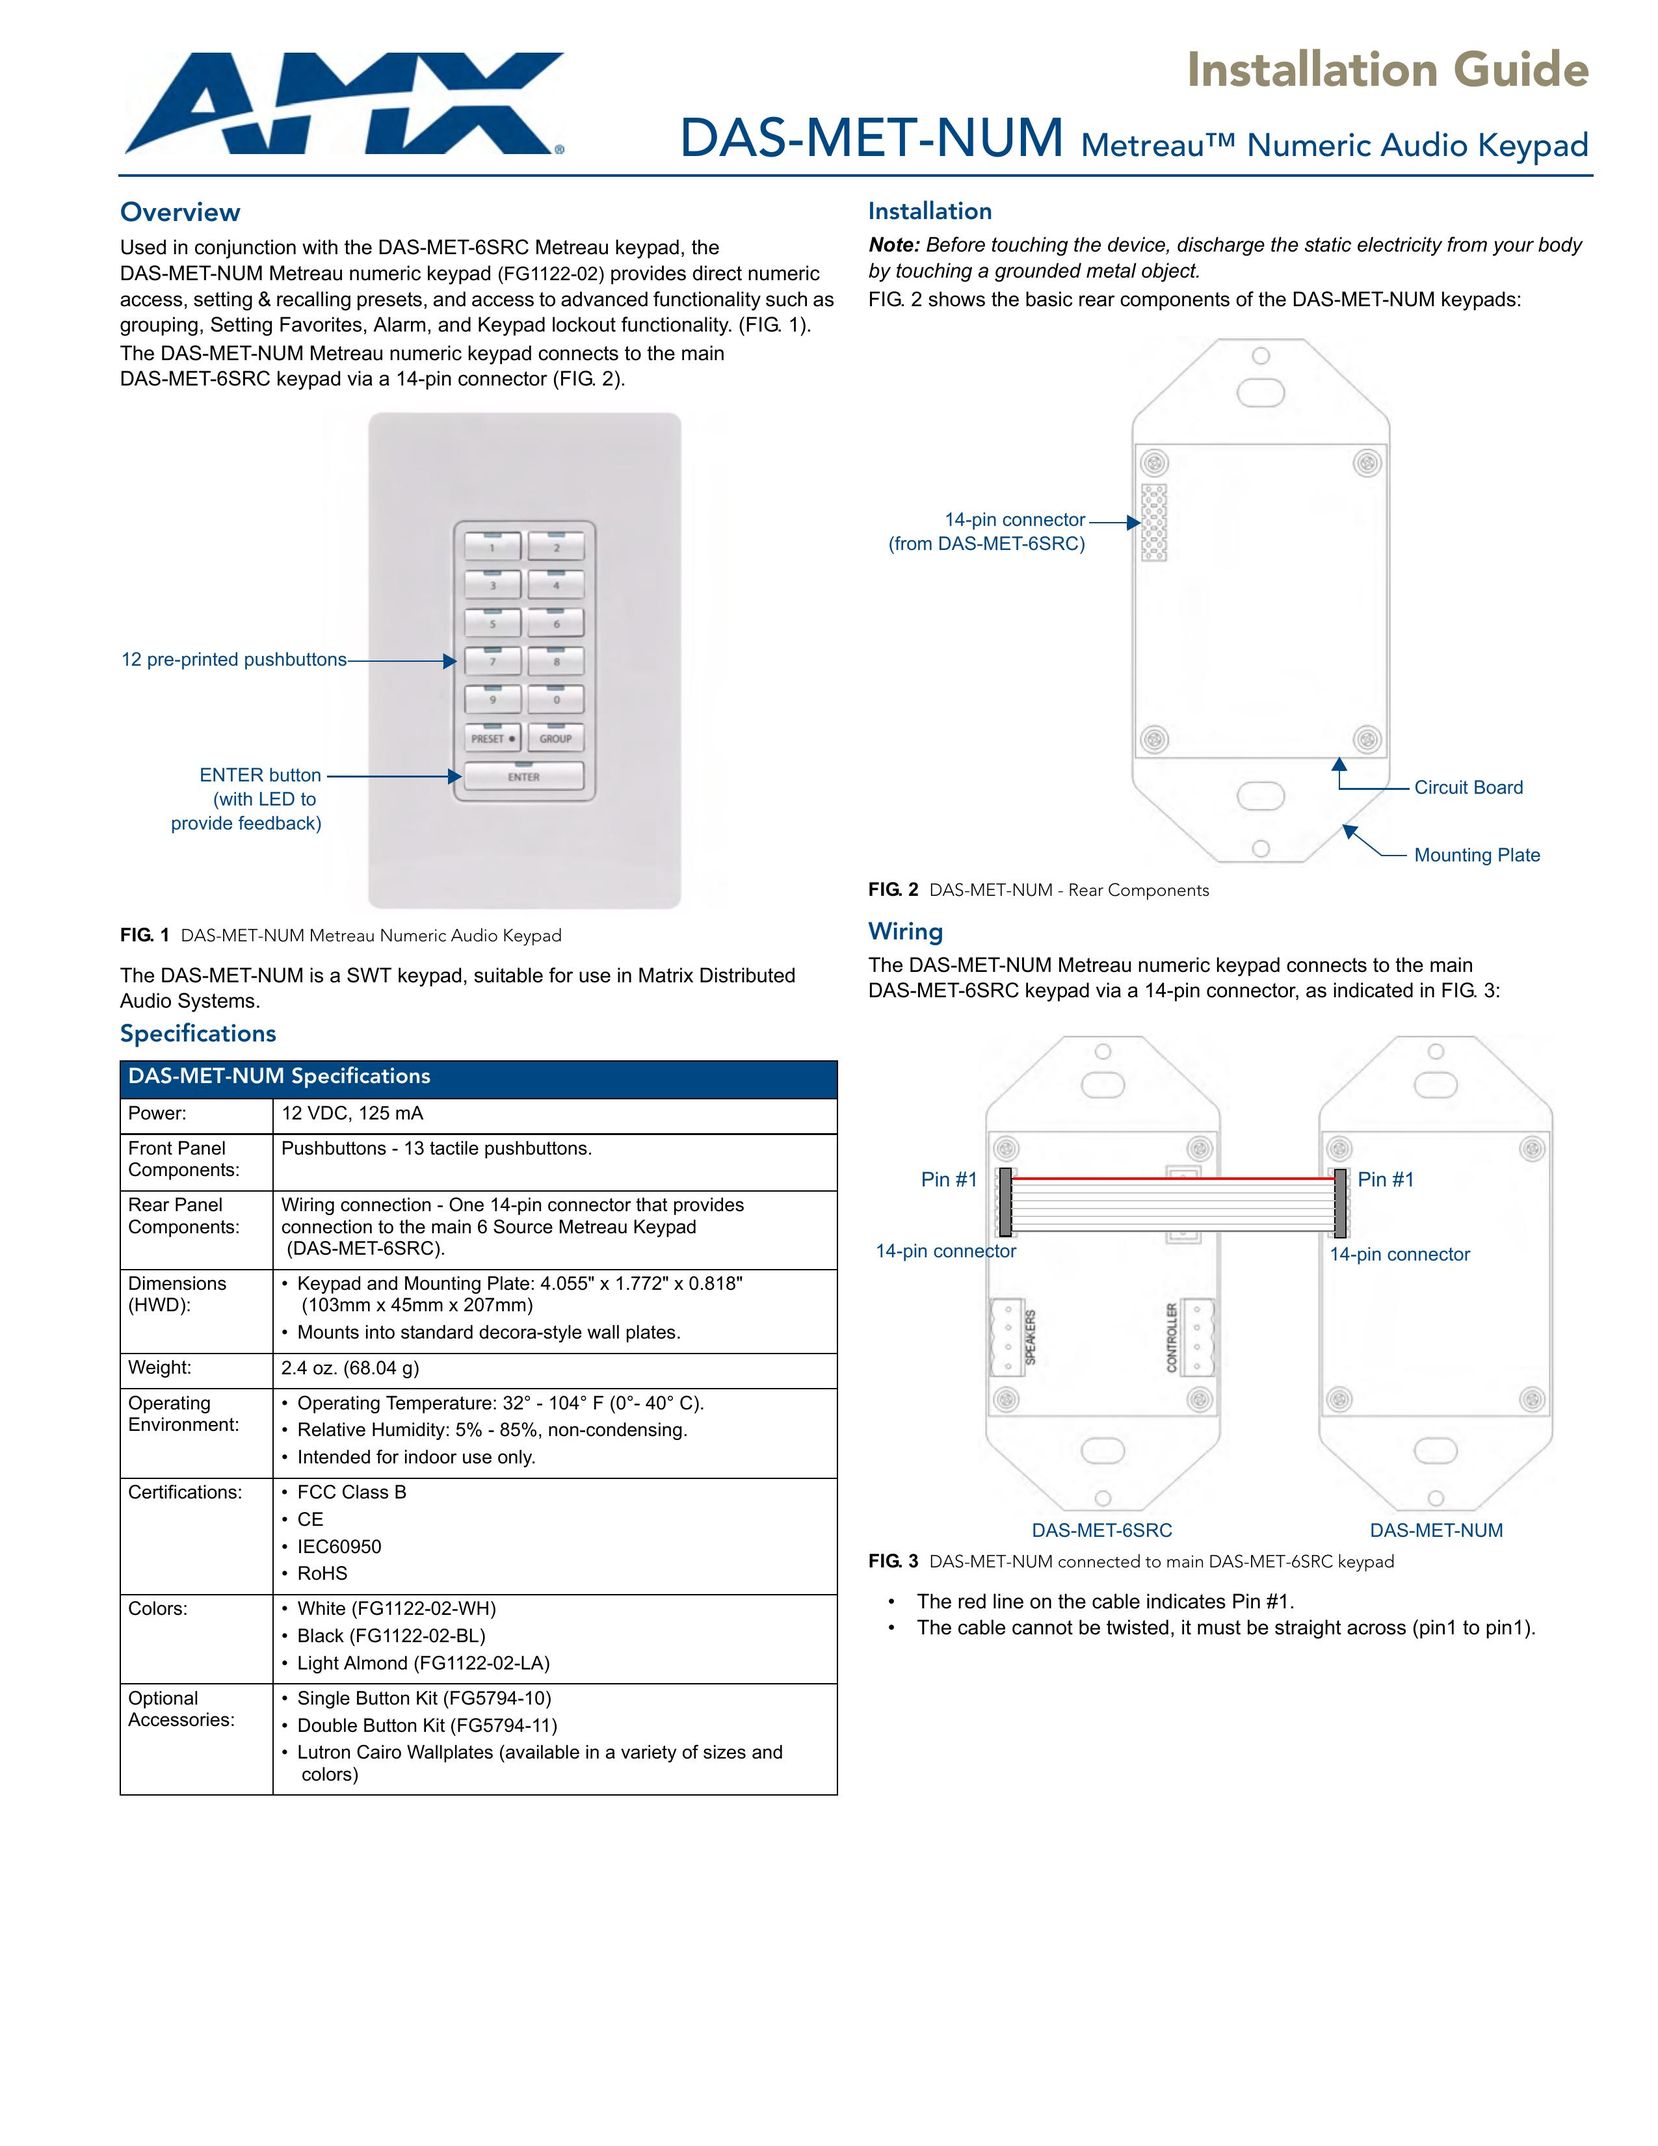 AMX DAS-MET-NUM Network Card User Manual